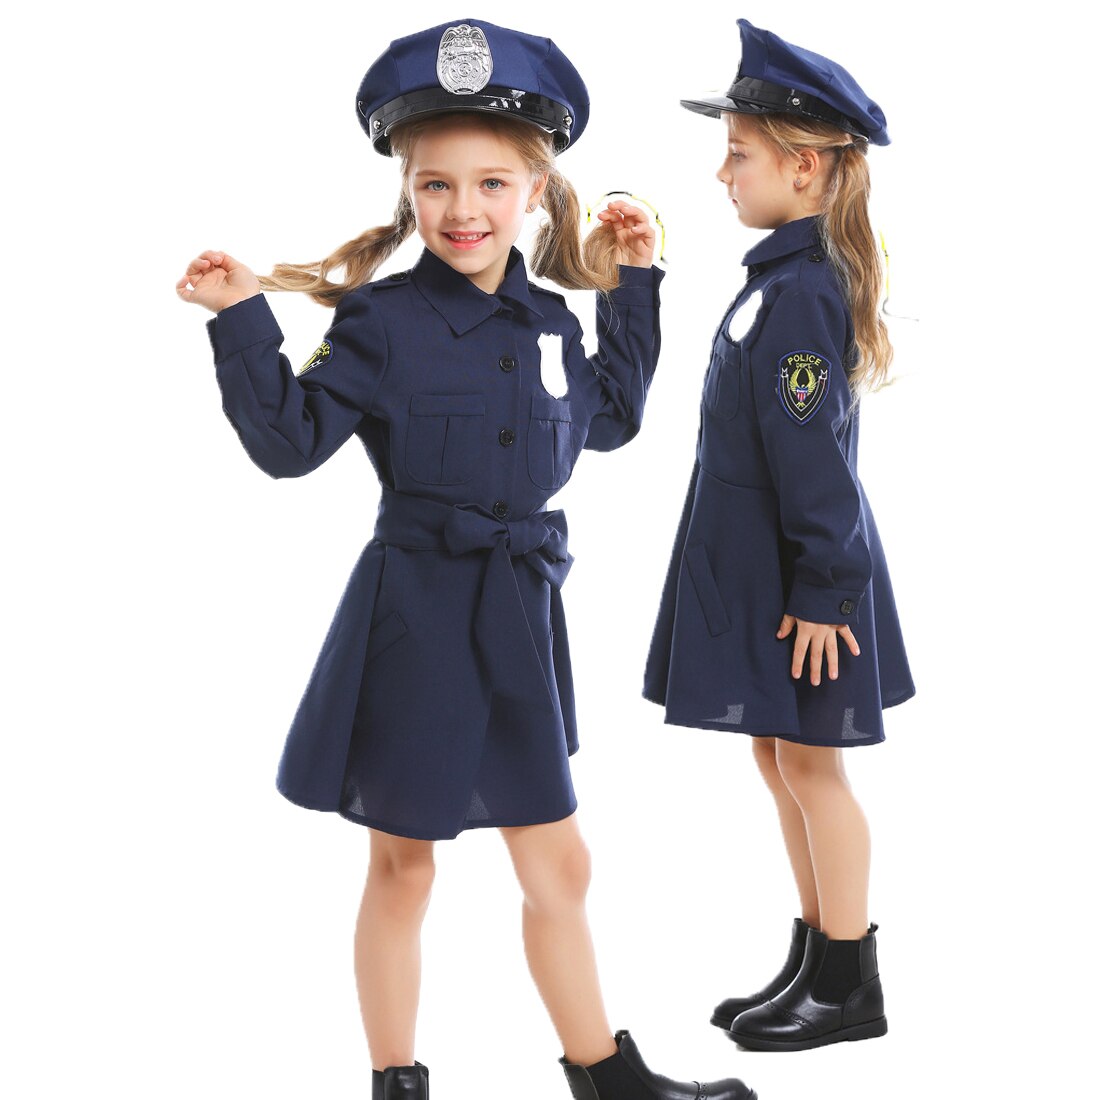 3Pcs Pretend Play Leuke Politie Dressup Set Politieagente Kostuum Voor 90Cm-110Cm Kids-Xs/S/M/L